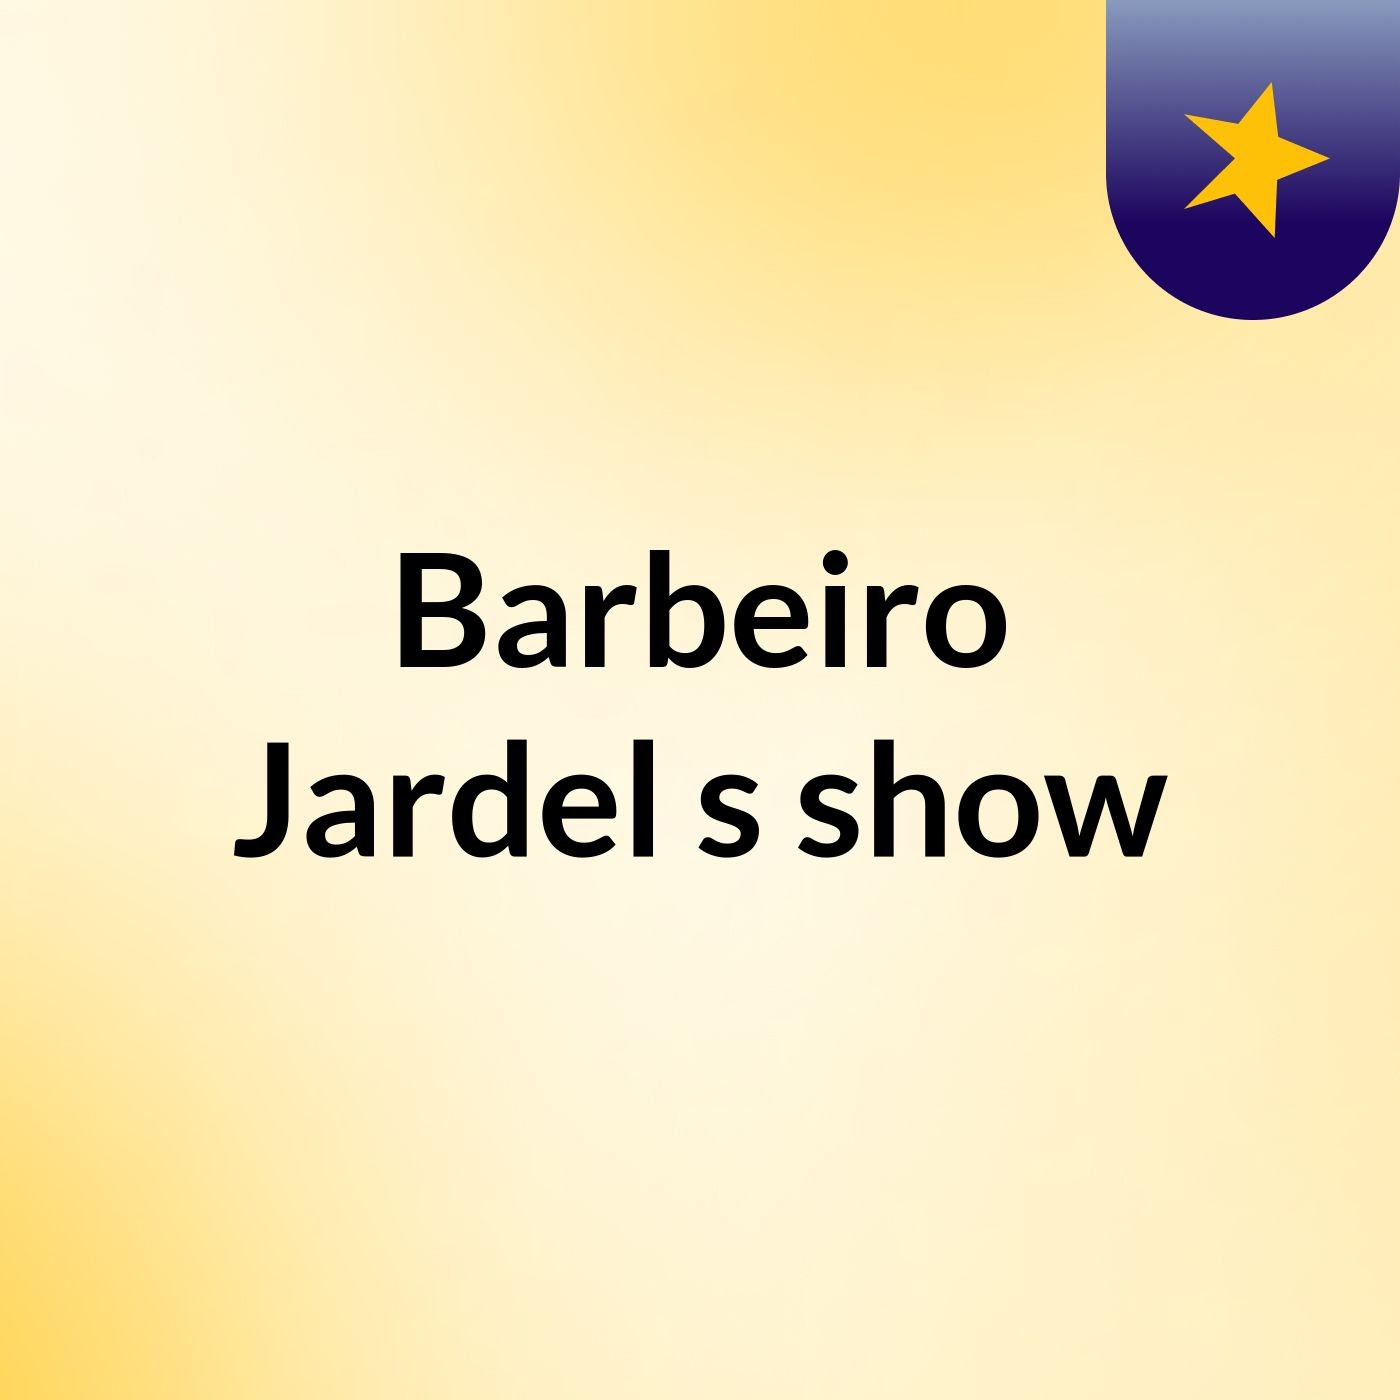 Barbeiro Jardel's show